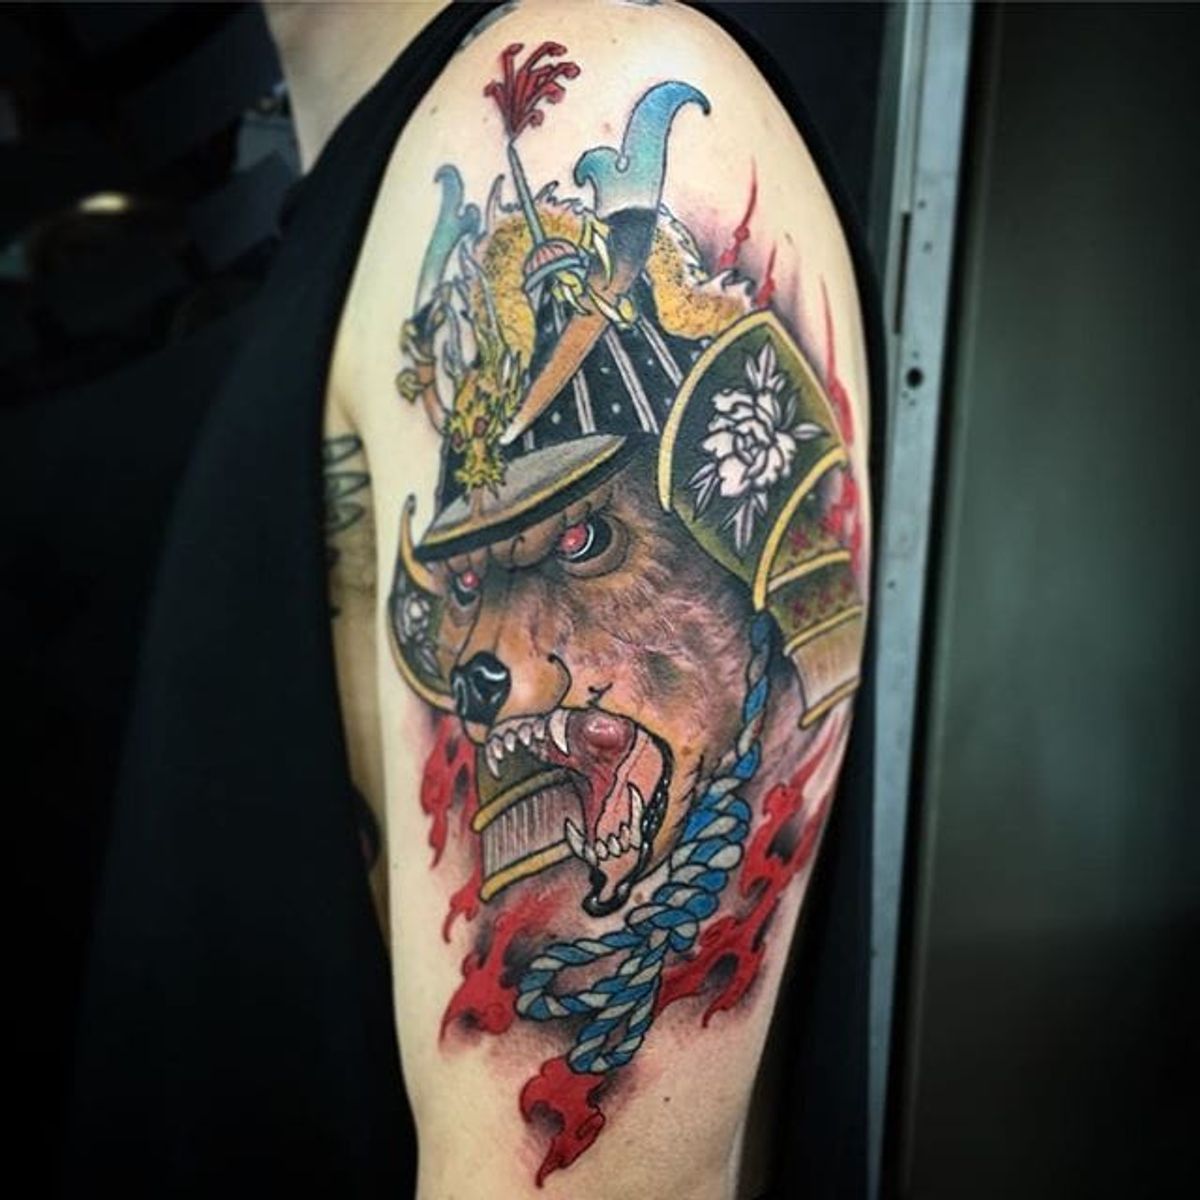 Tattoo uploaded by Robert Davies • Samurai Bear Tattoo by Bernard Kwok  #samuraibear #samuraibeartattoo #japanese #japanesetattoo #neotraditional  #neotraditionaljapanese #neotraditionalstyle #BernardKwok • Tattoodo